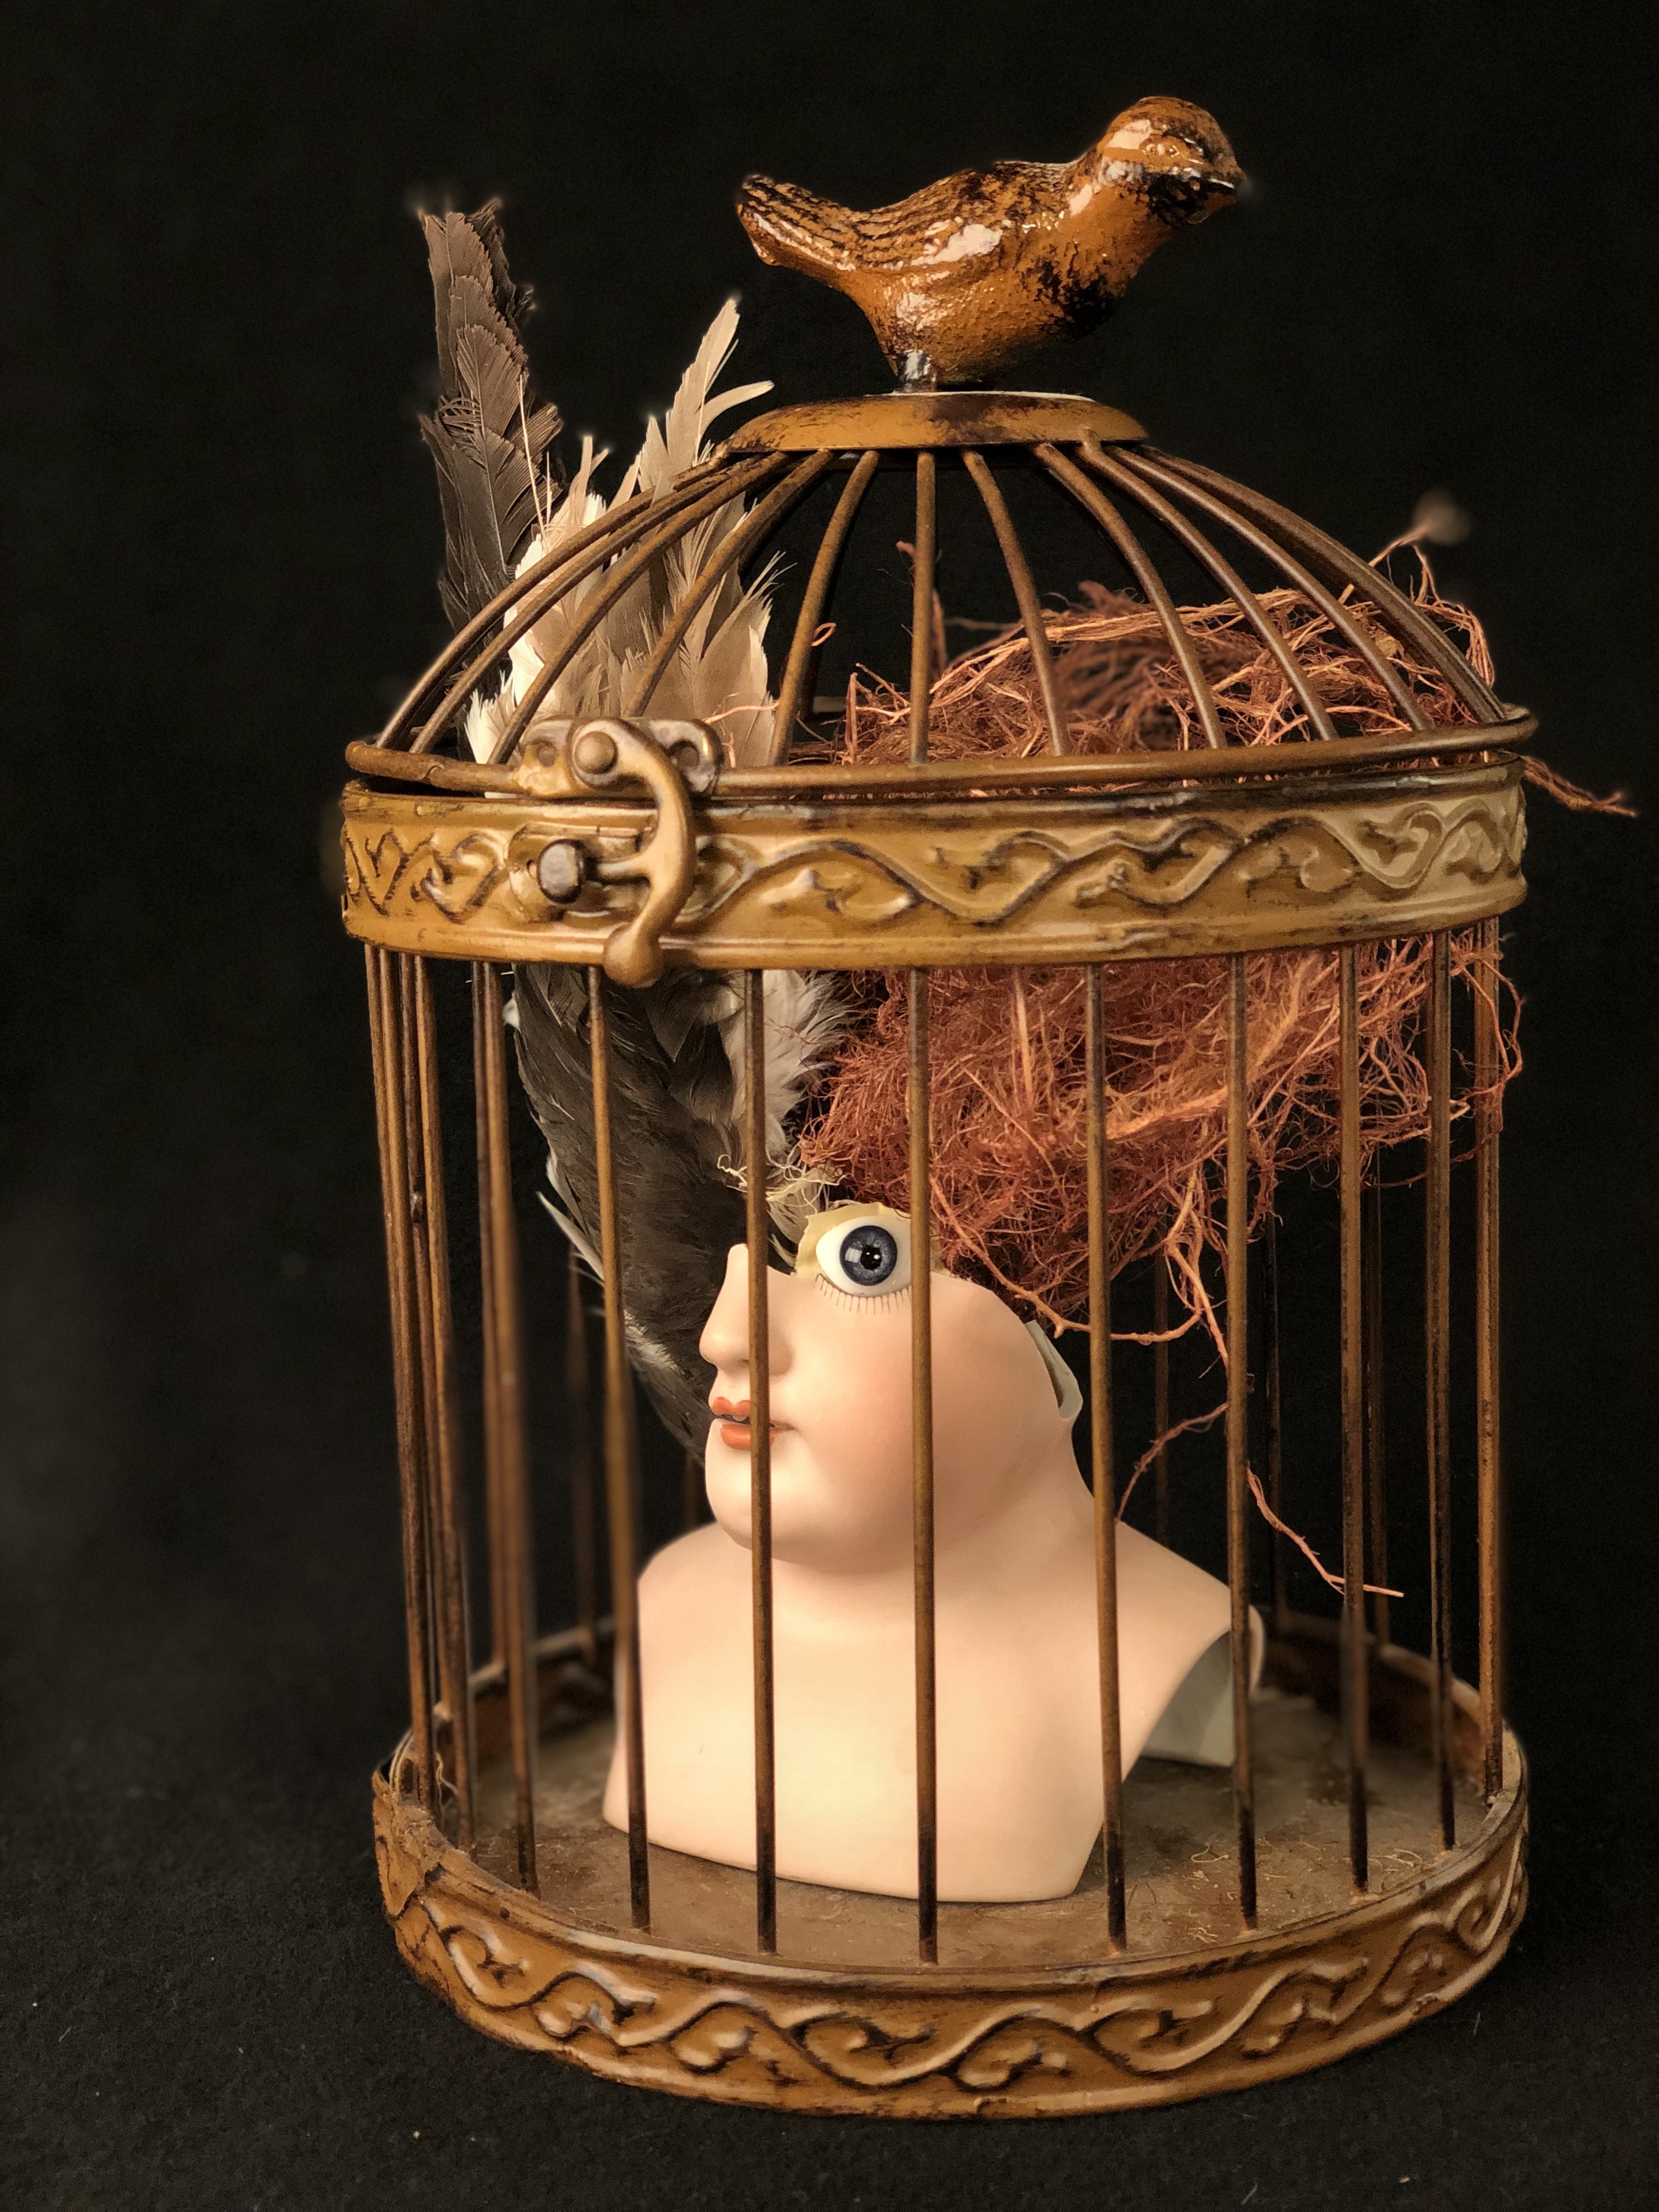 Caged Bird Still Flies - Endlings, Goddesses, and Creepy Baby Dolls series - Crimson Rose